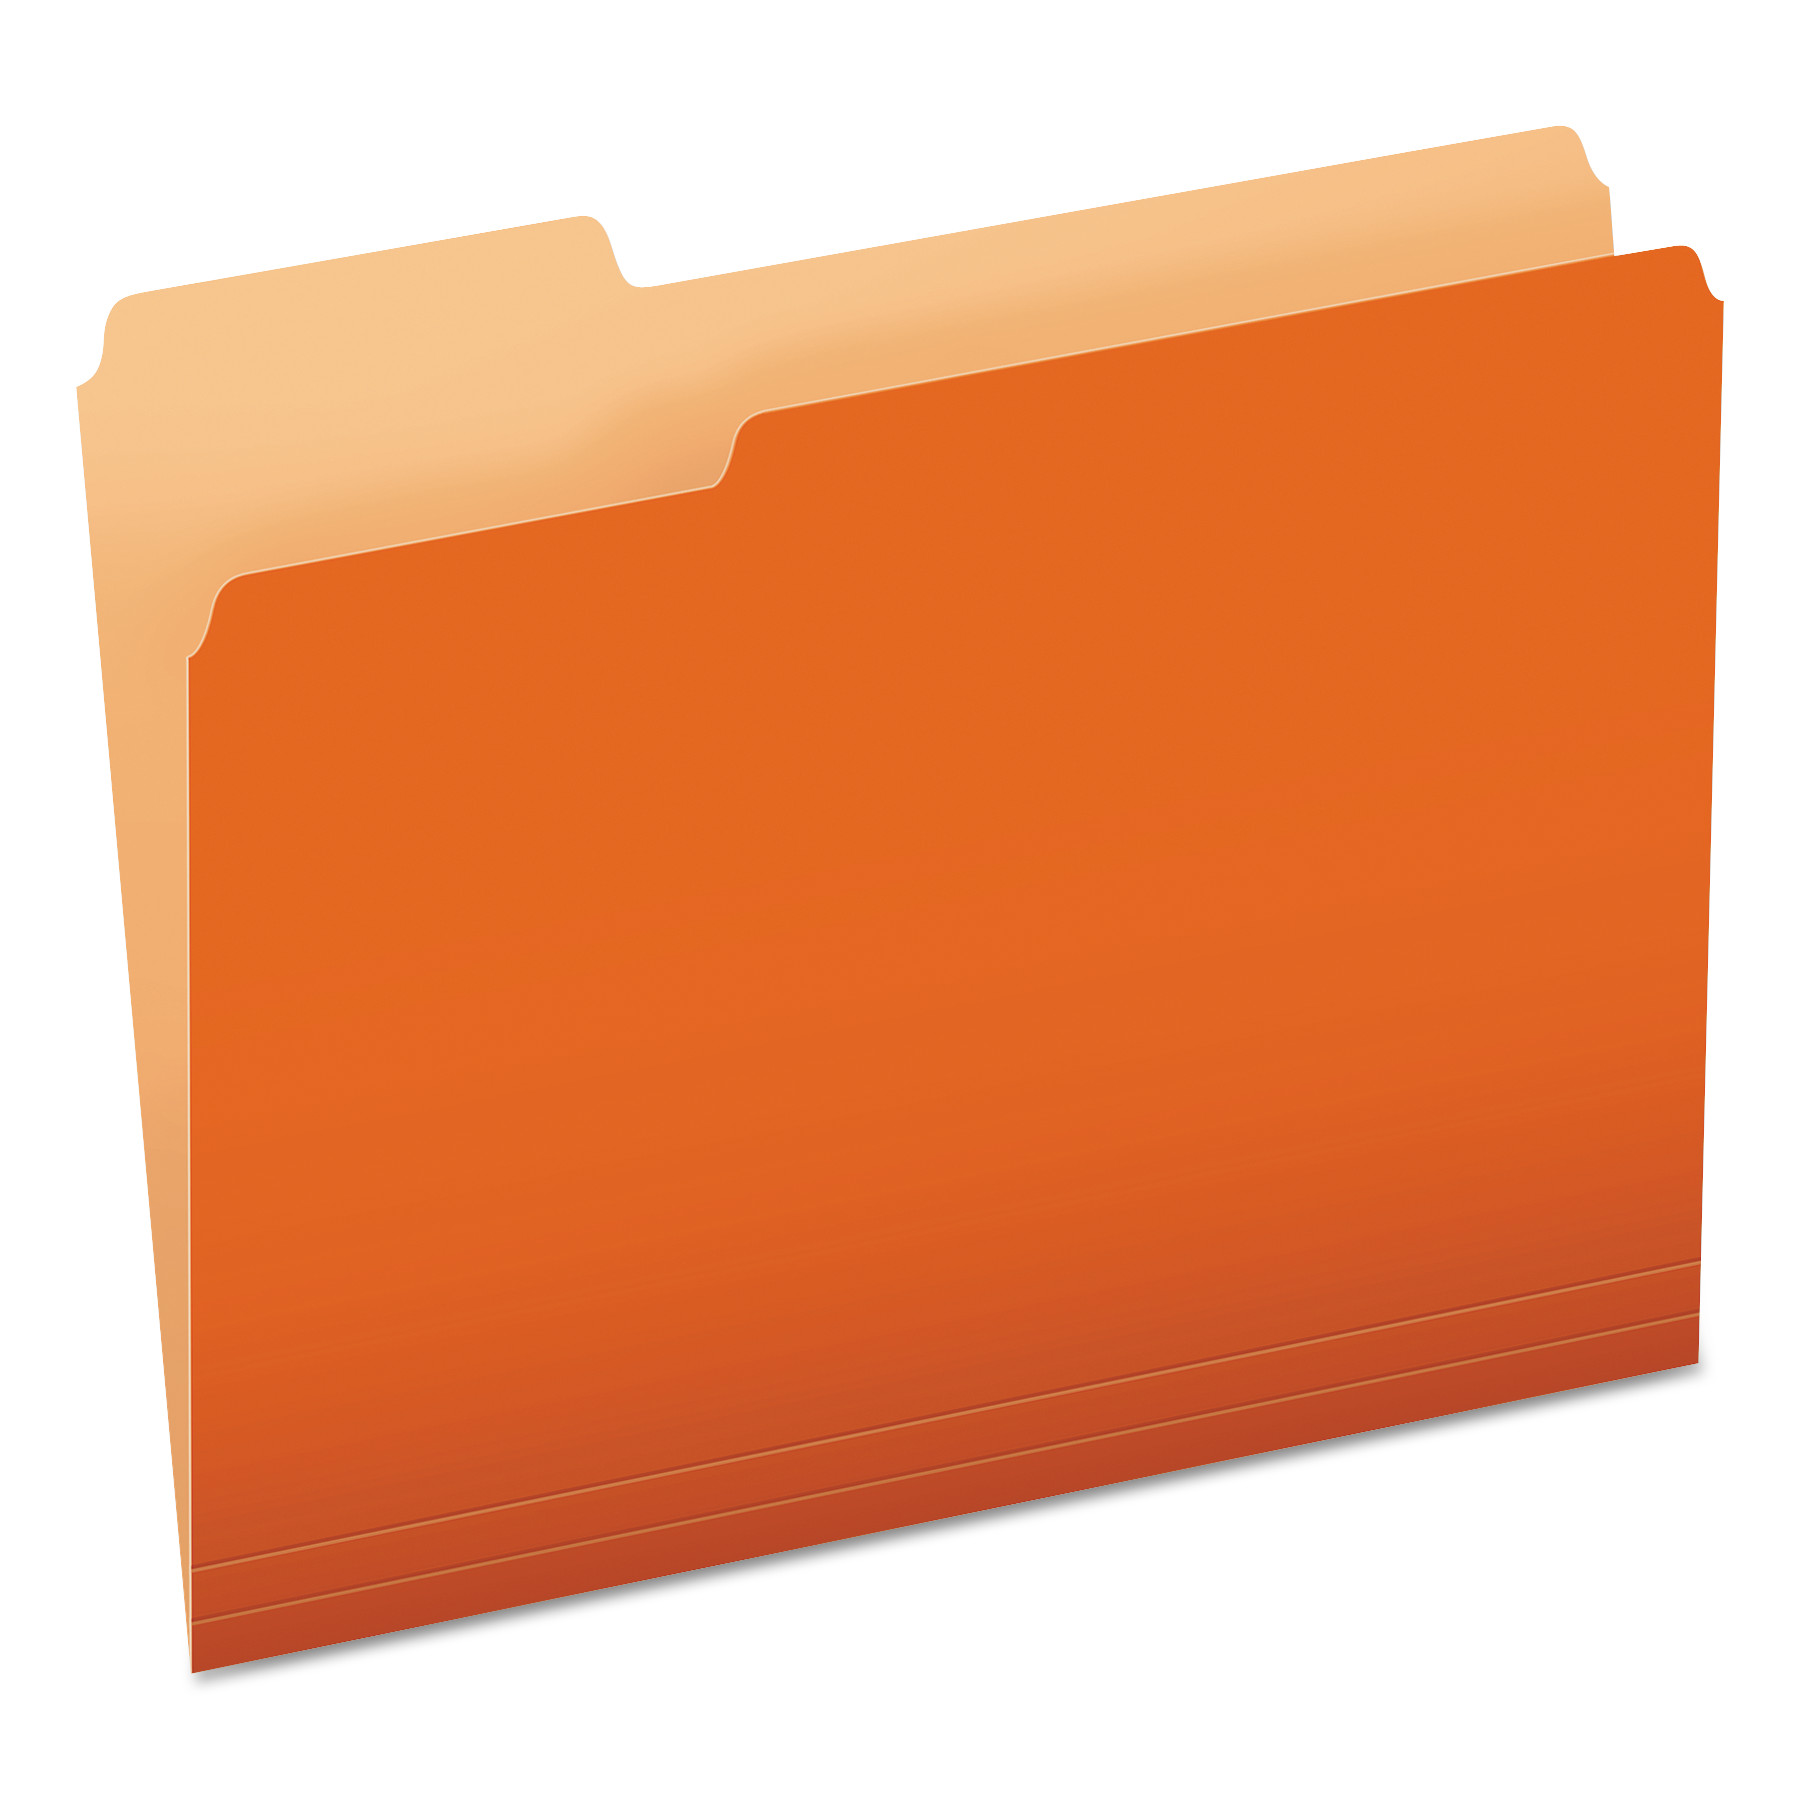  Pendaflex 152 1/3 ORA Colored File Folders, 1/3-Cut Tabs, Letter Size, Orange/Light Orange, 100/Box (PFX15213ORA) 